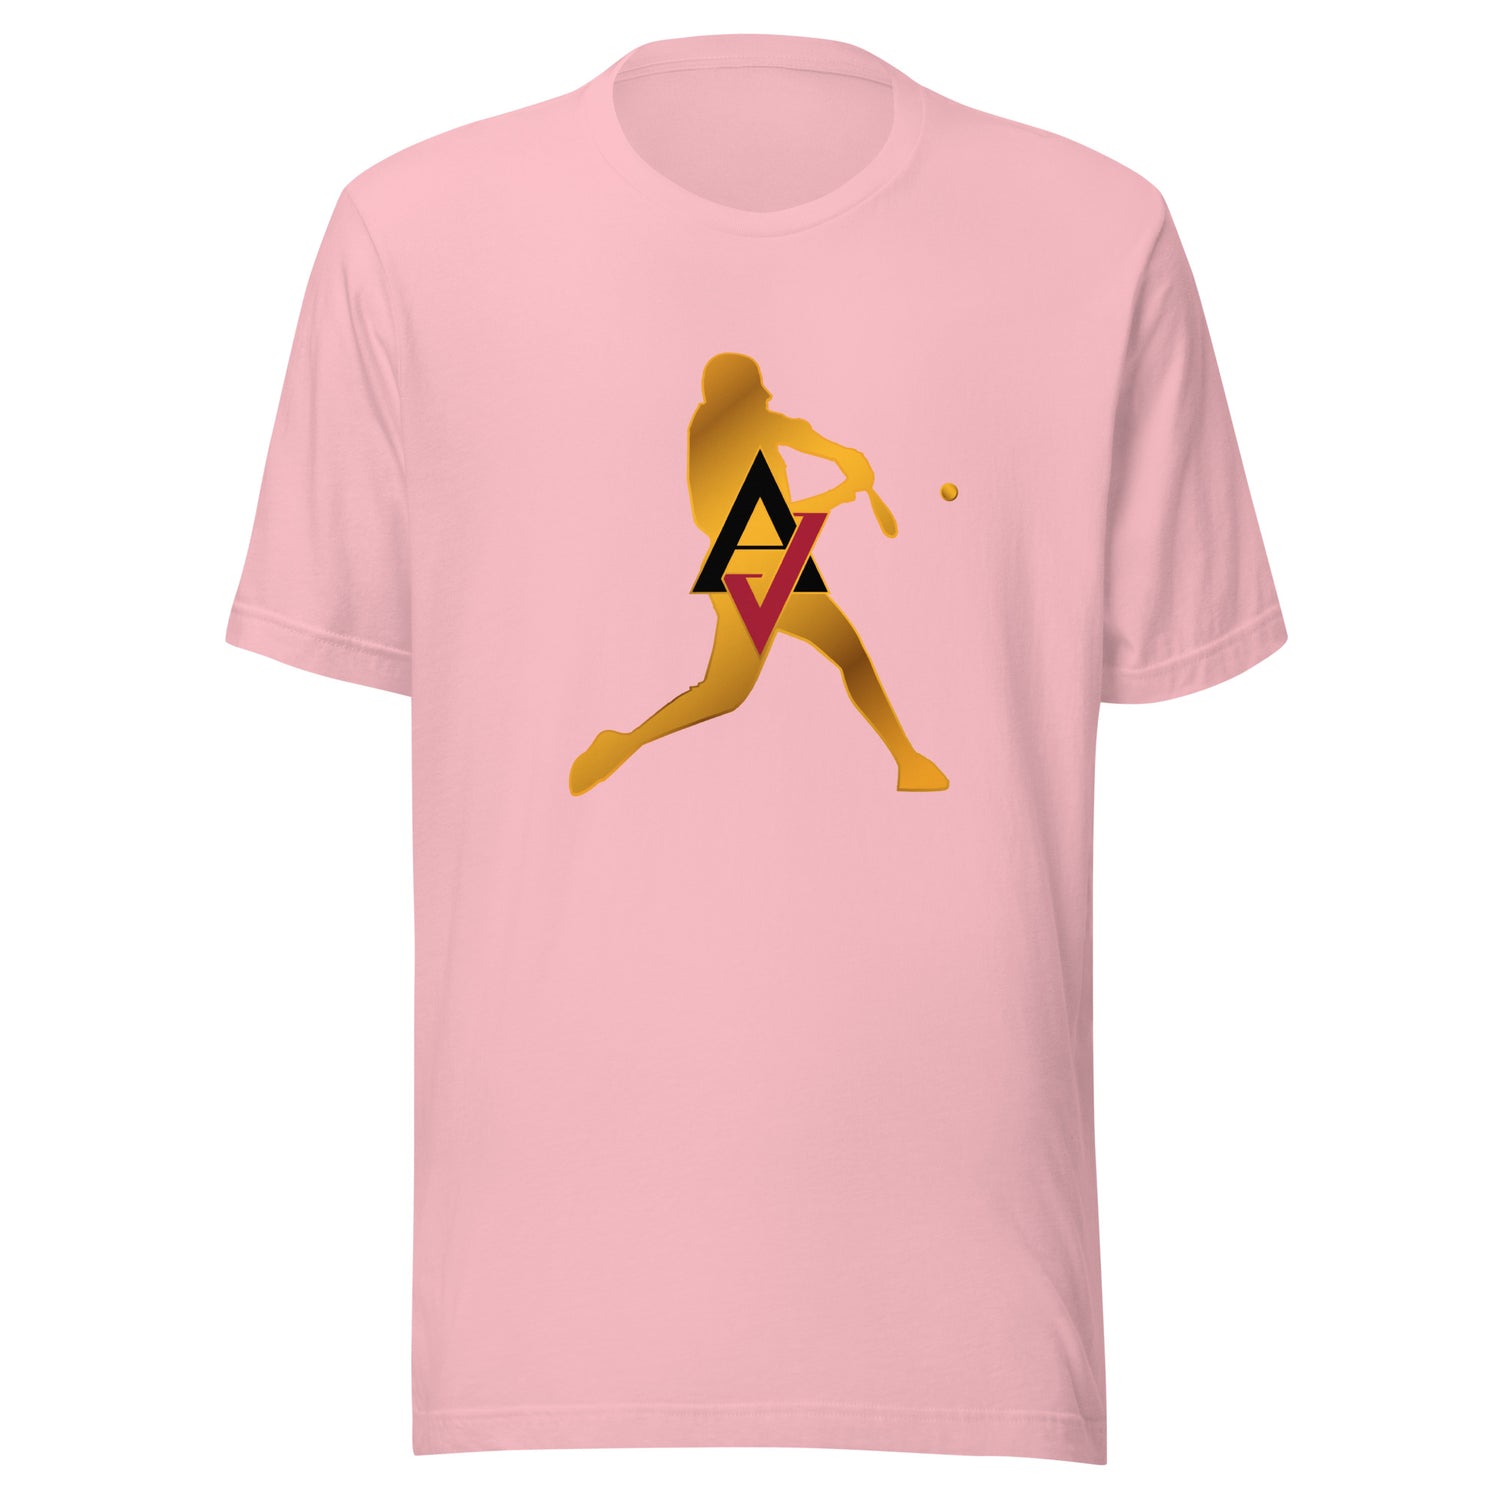 AJ Vukovich "Classic" t-shirt - Fan Arch